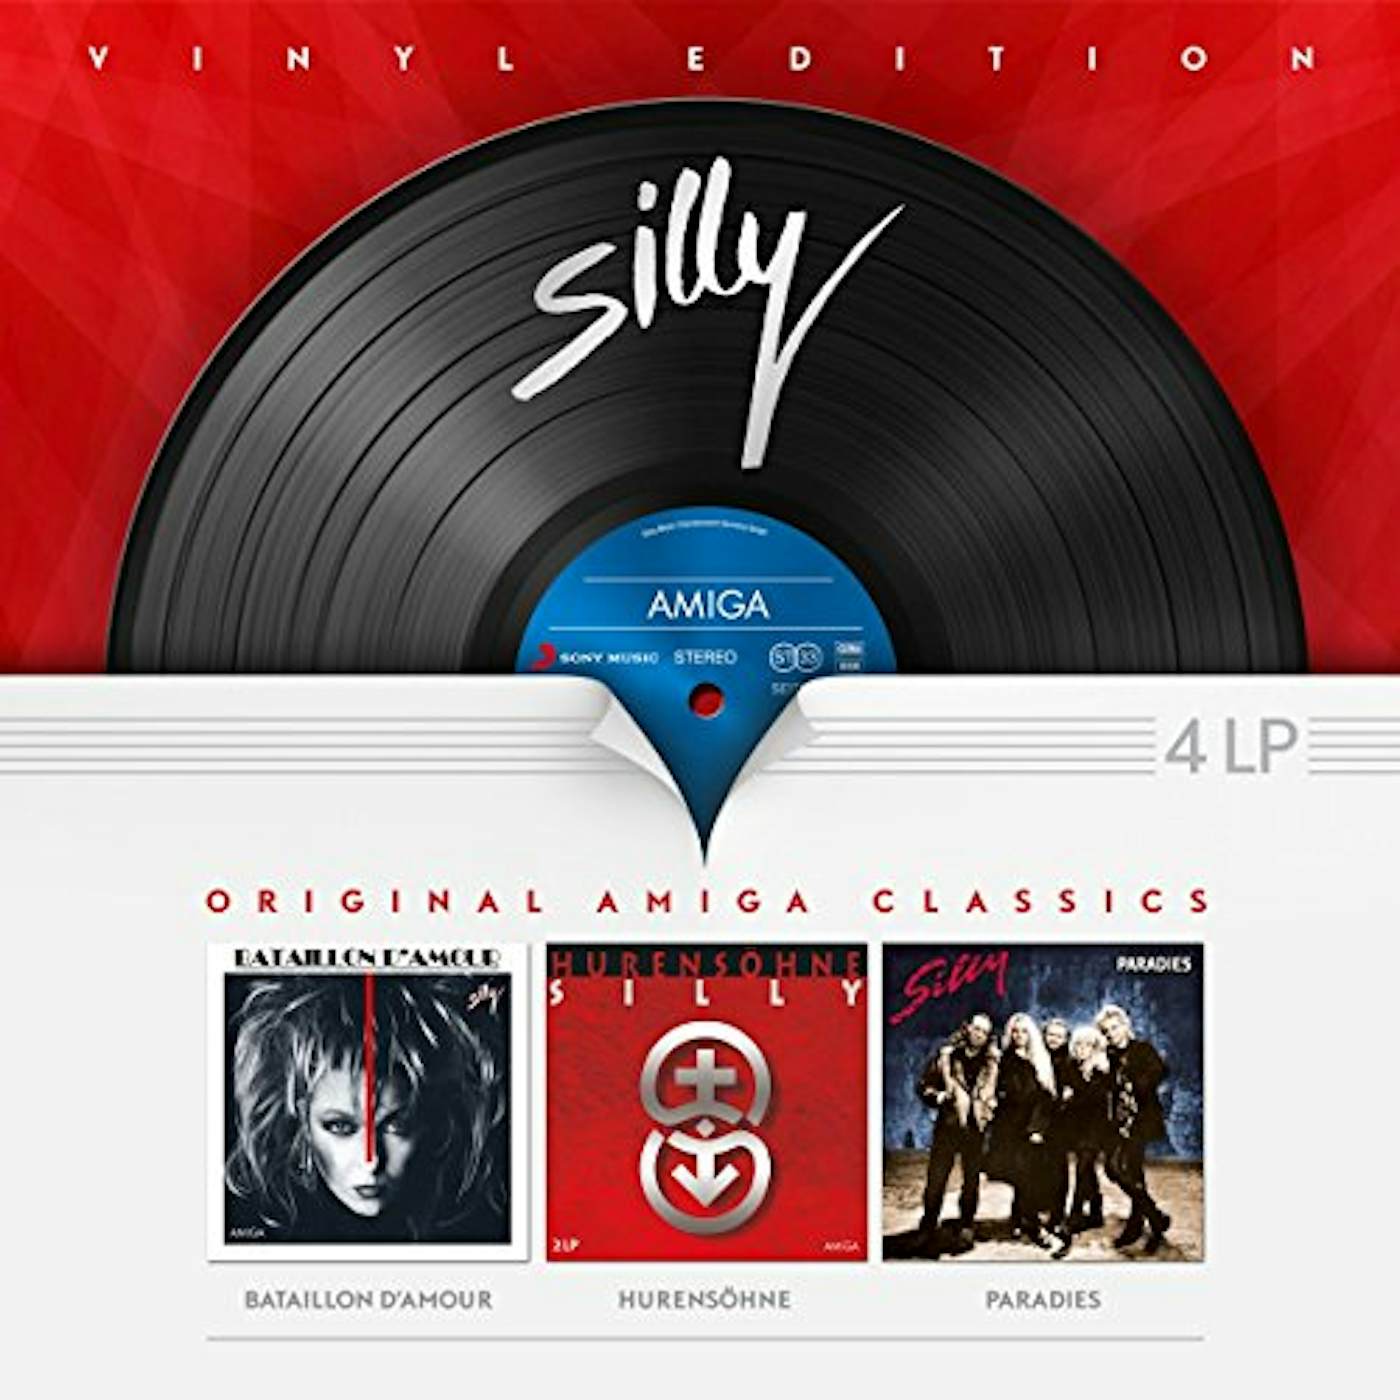 SILLY VINYL EDITION (AMIGA LP BOX) Vinyl Record